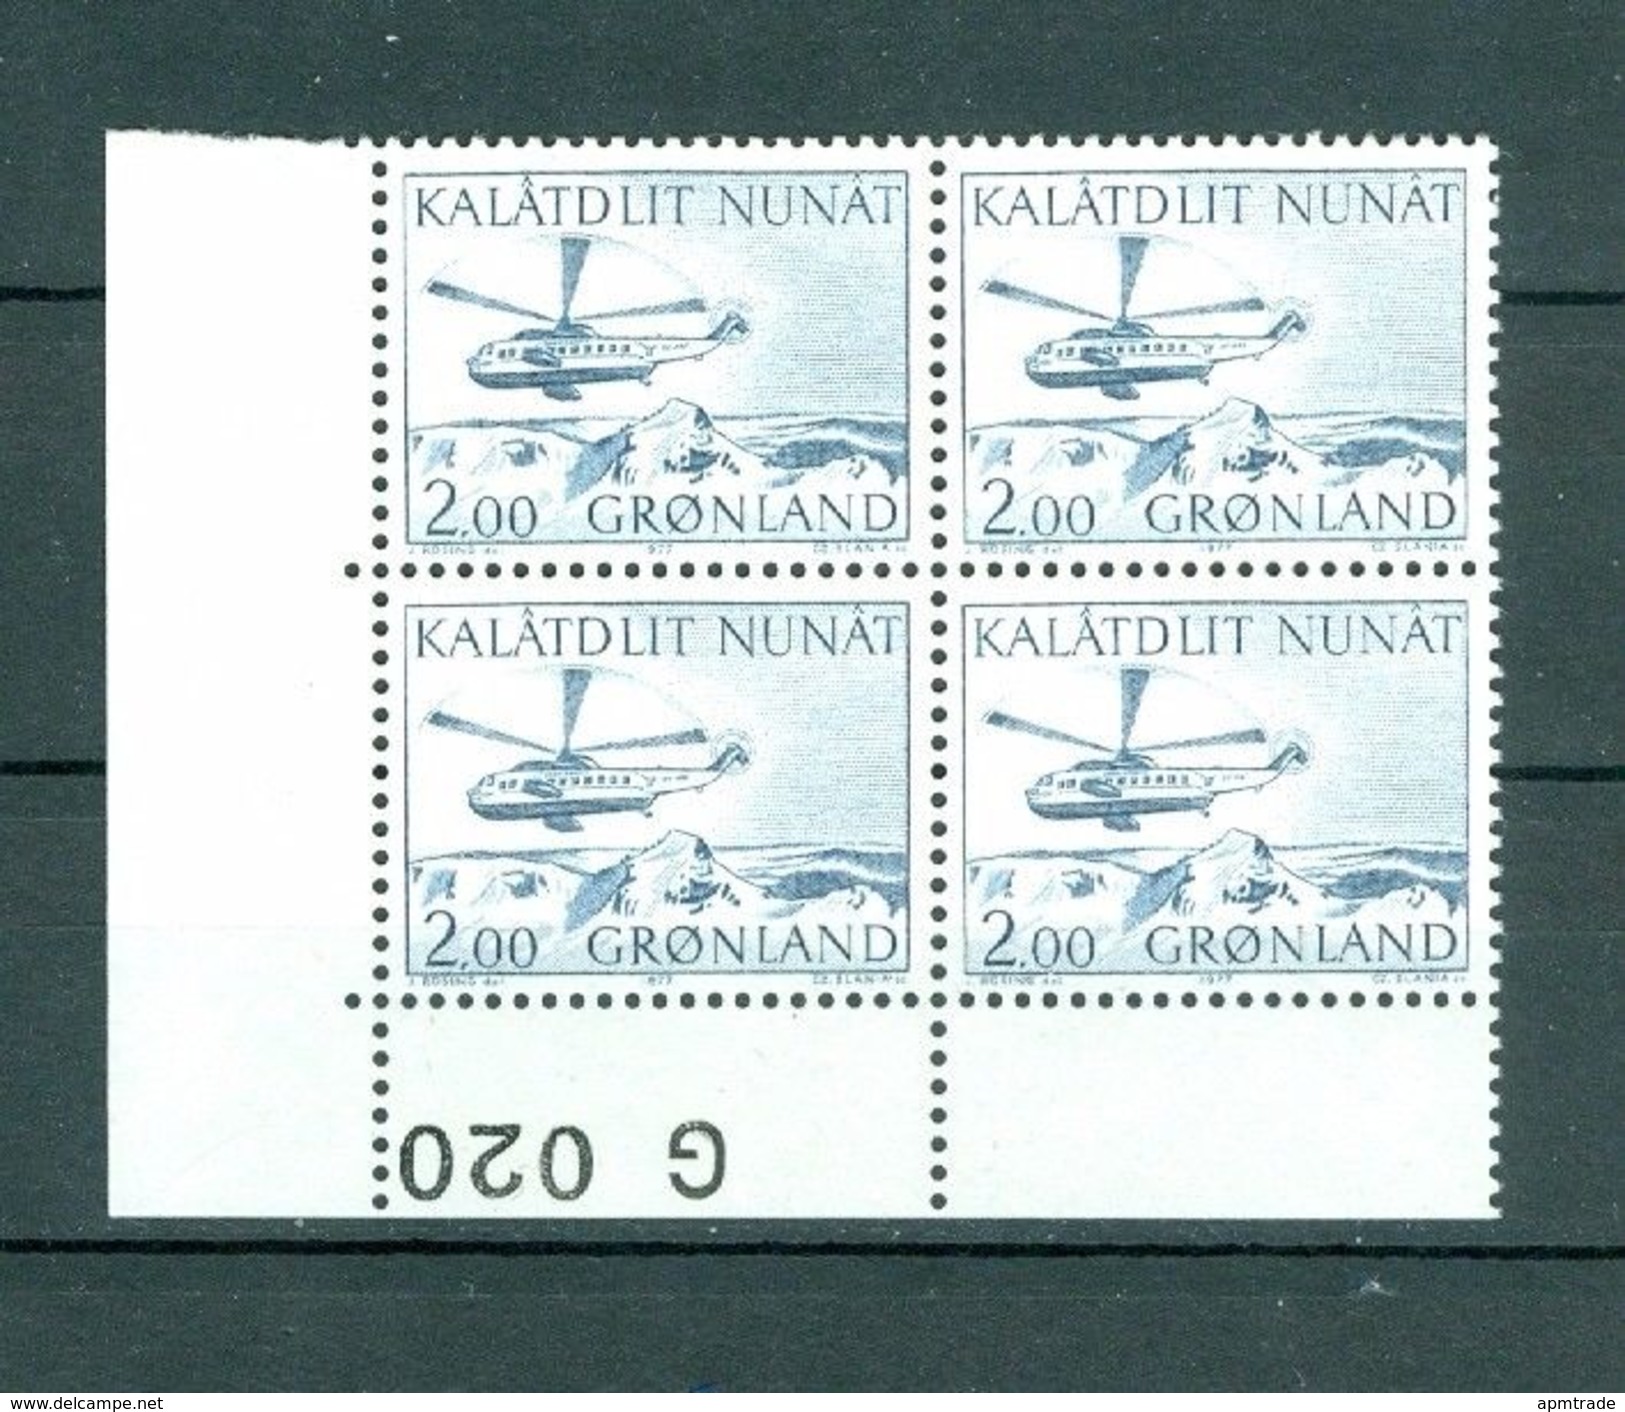 Greenland. 1 Mnh 4-Plate Blocks  1977 #  G 020. 200 Ore  Helicopter.  Cz. Slania - Blocks & Sheetlets